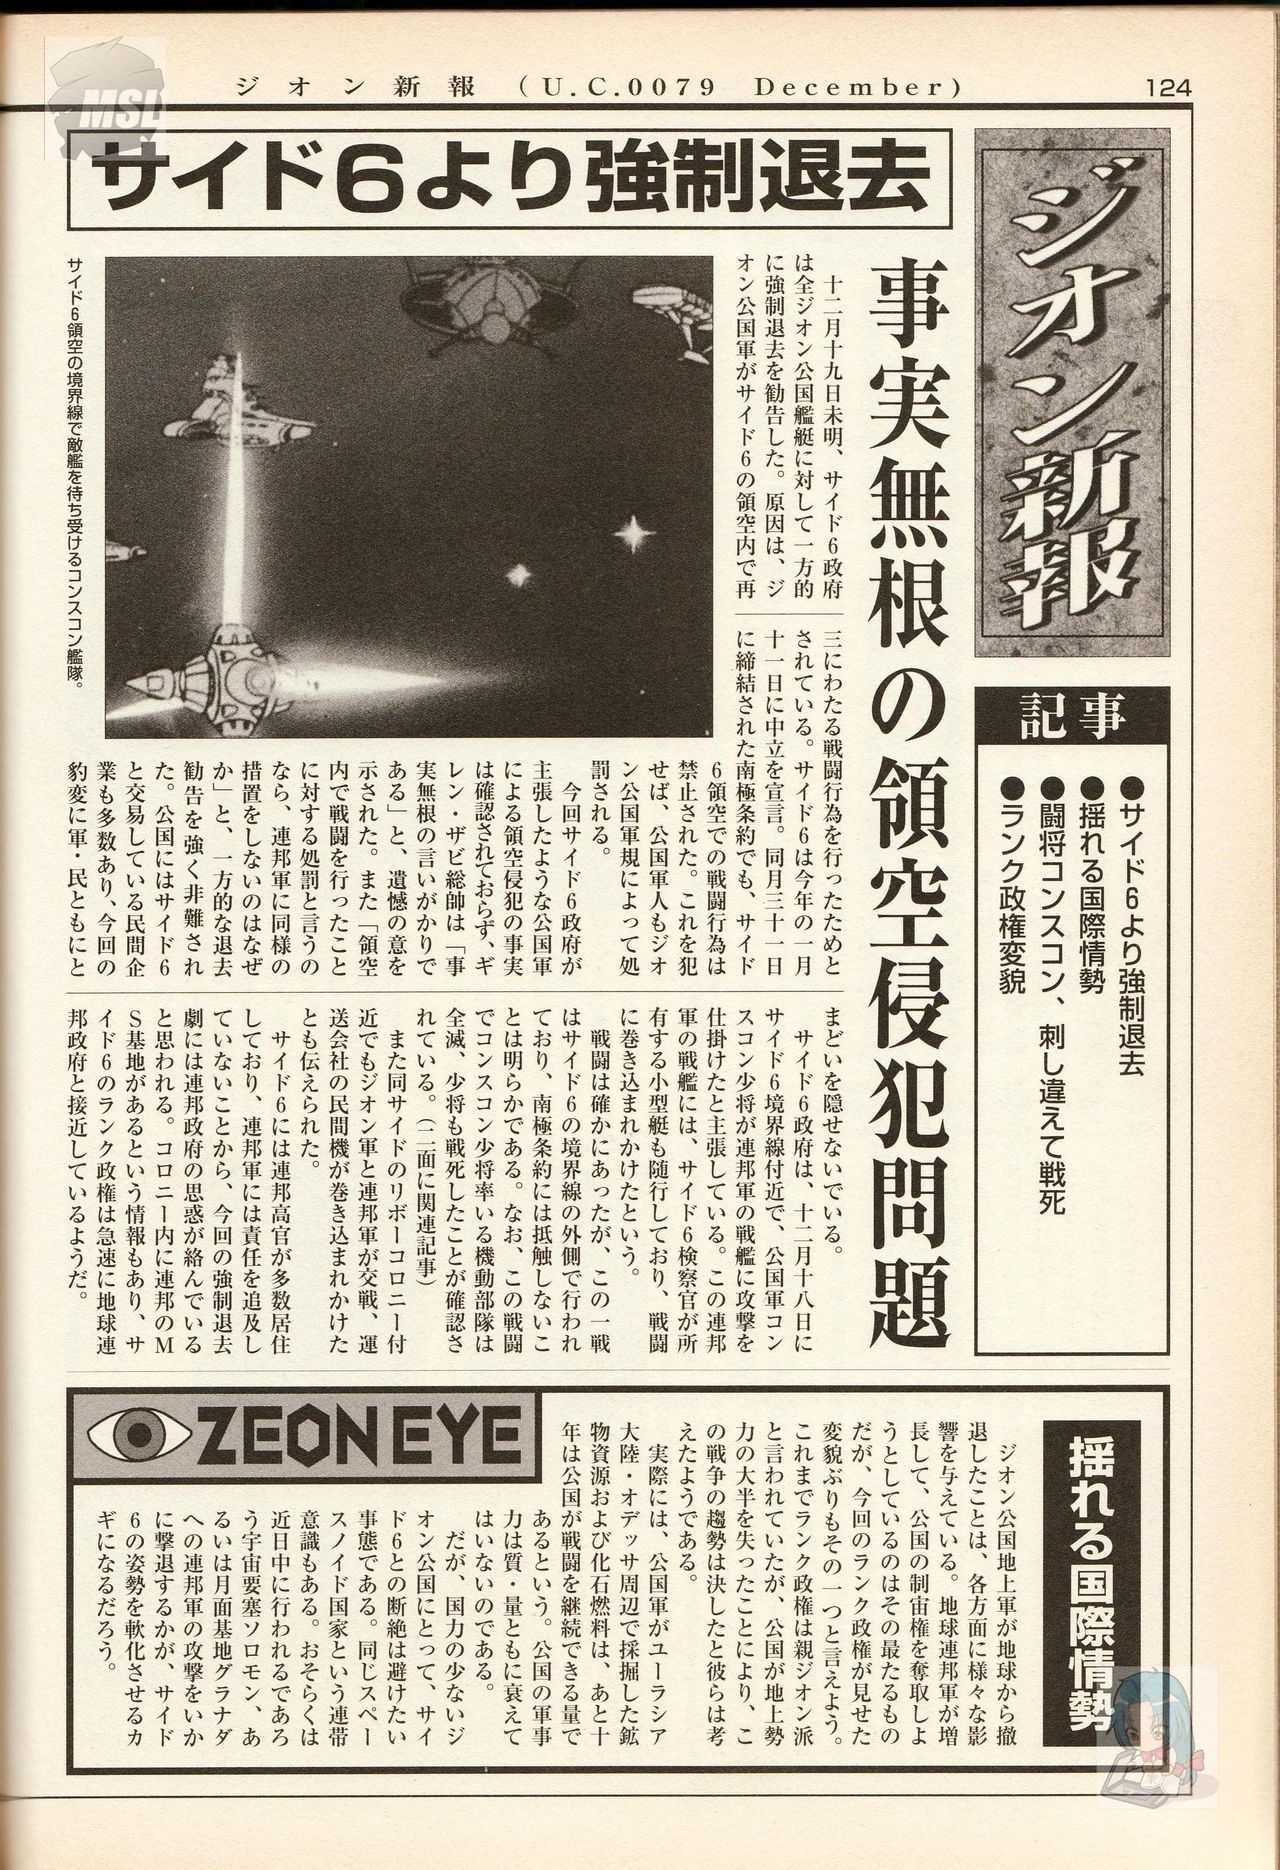 Mobile Suit Gundam - Zeon - Classified Records 127